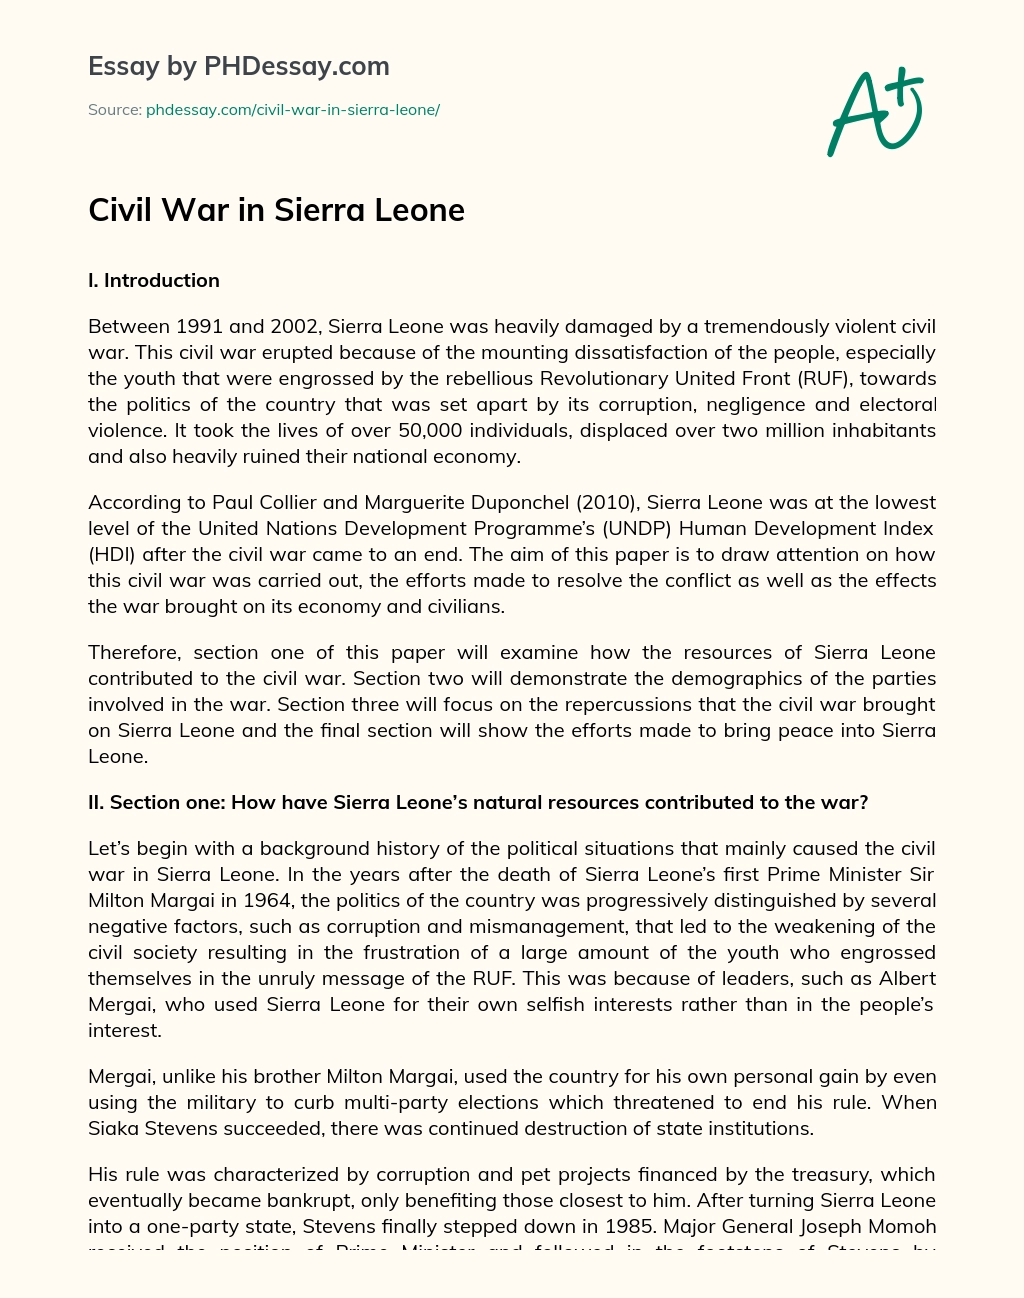 Civil War in Sierra Leone essay